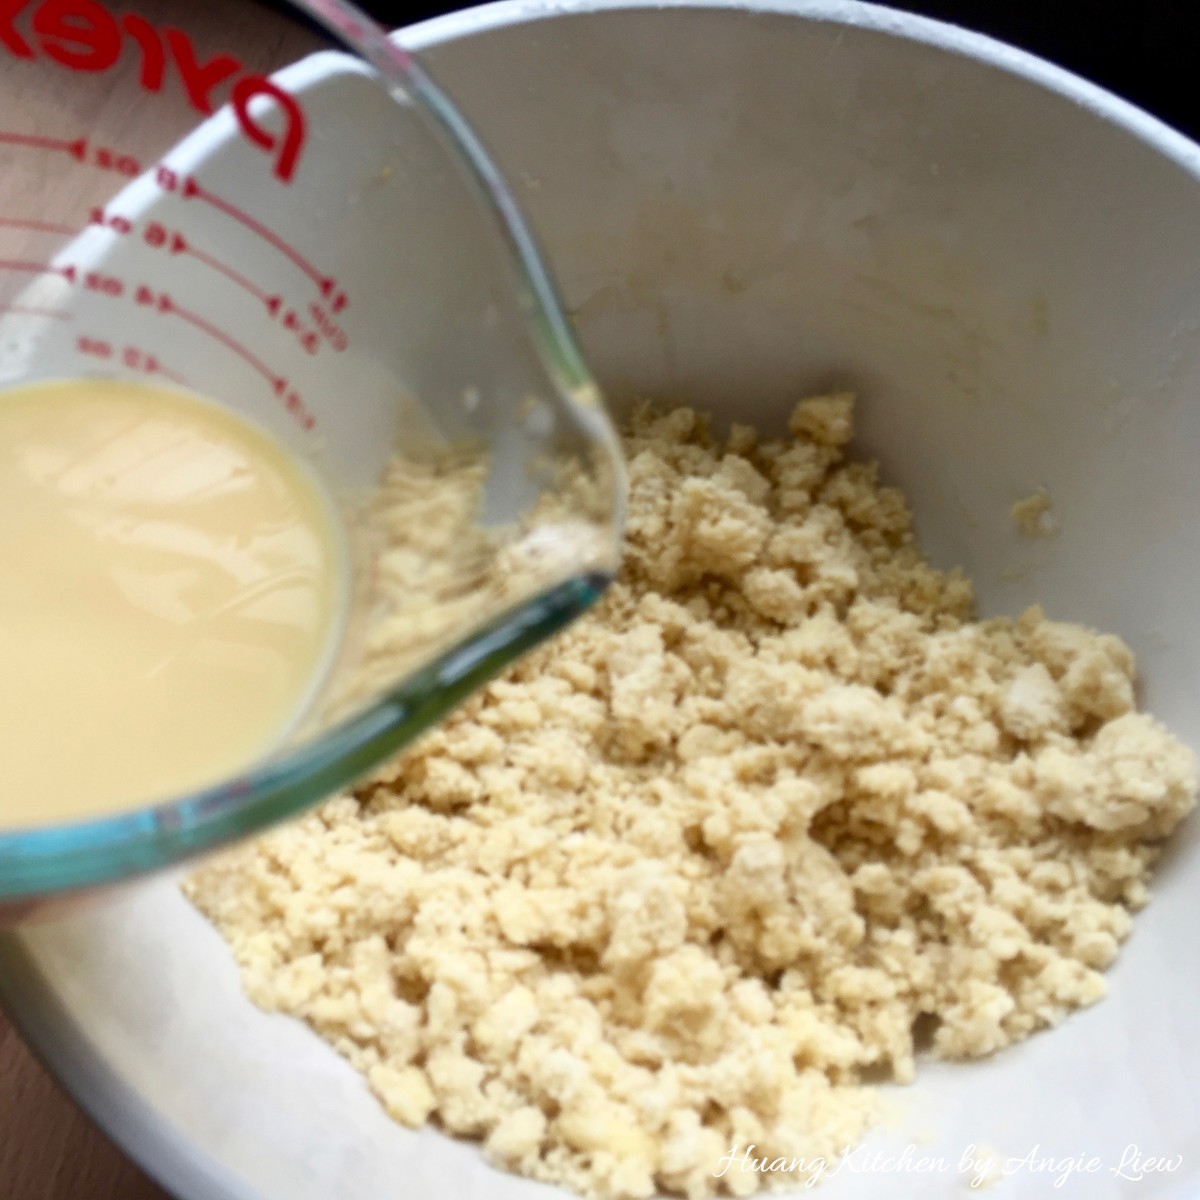 Dainty Pineapple Tarts - combine yolk and flour mixture